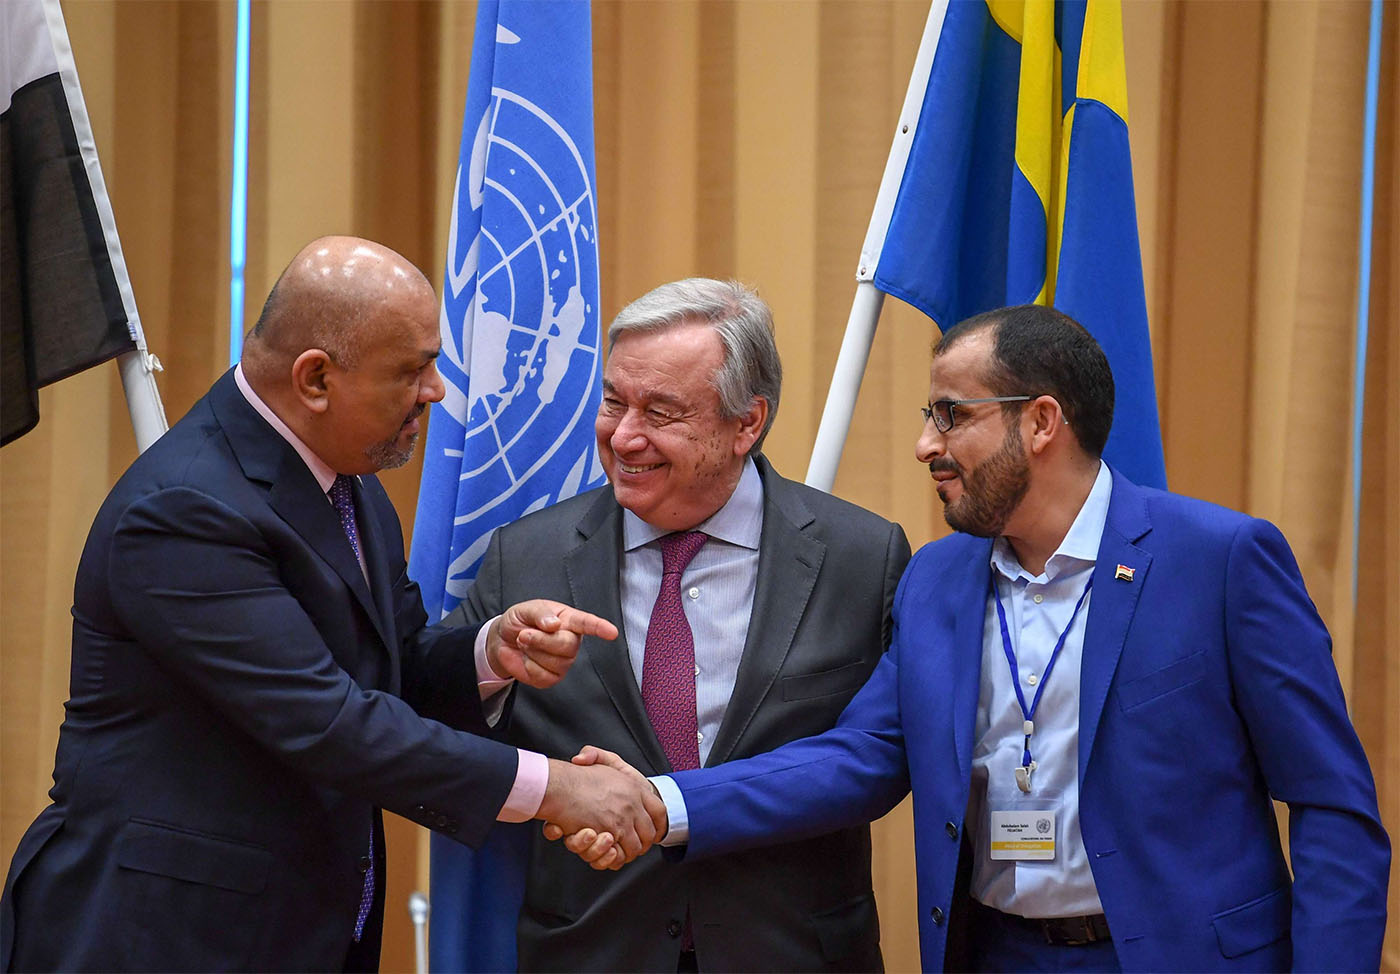 Yemen's FM Khaled al-Yamani (L) and rebel negotiator Mohammed Abdelsalam (R) shake hands